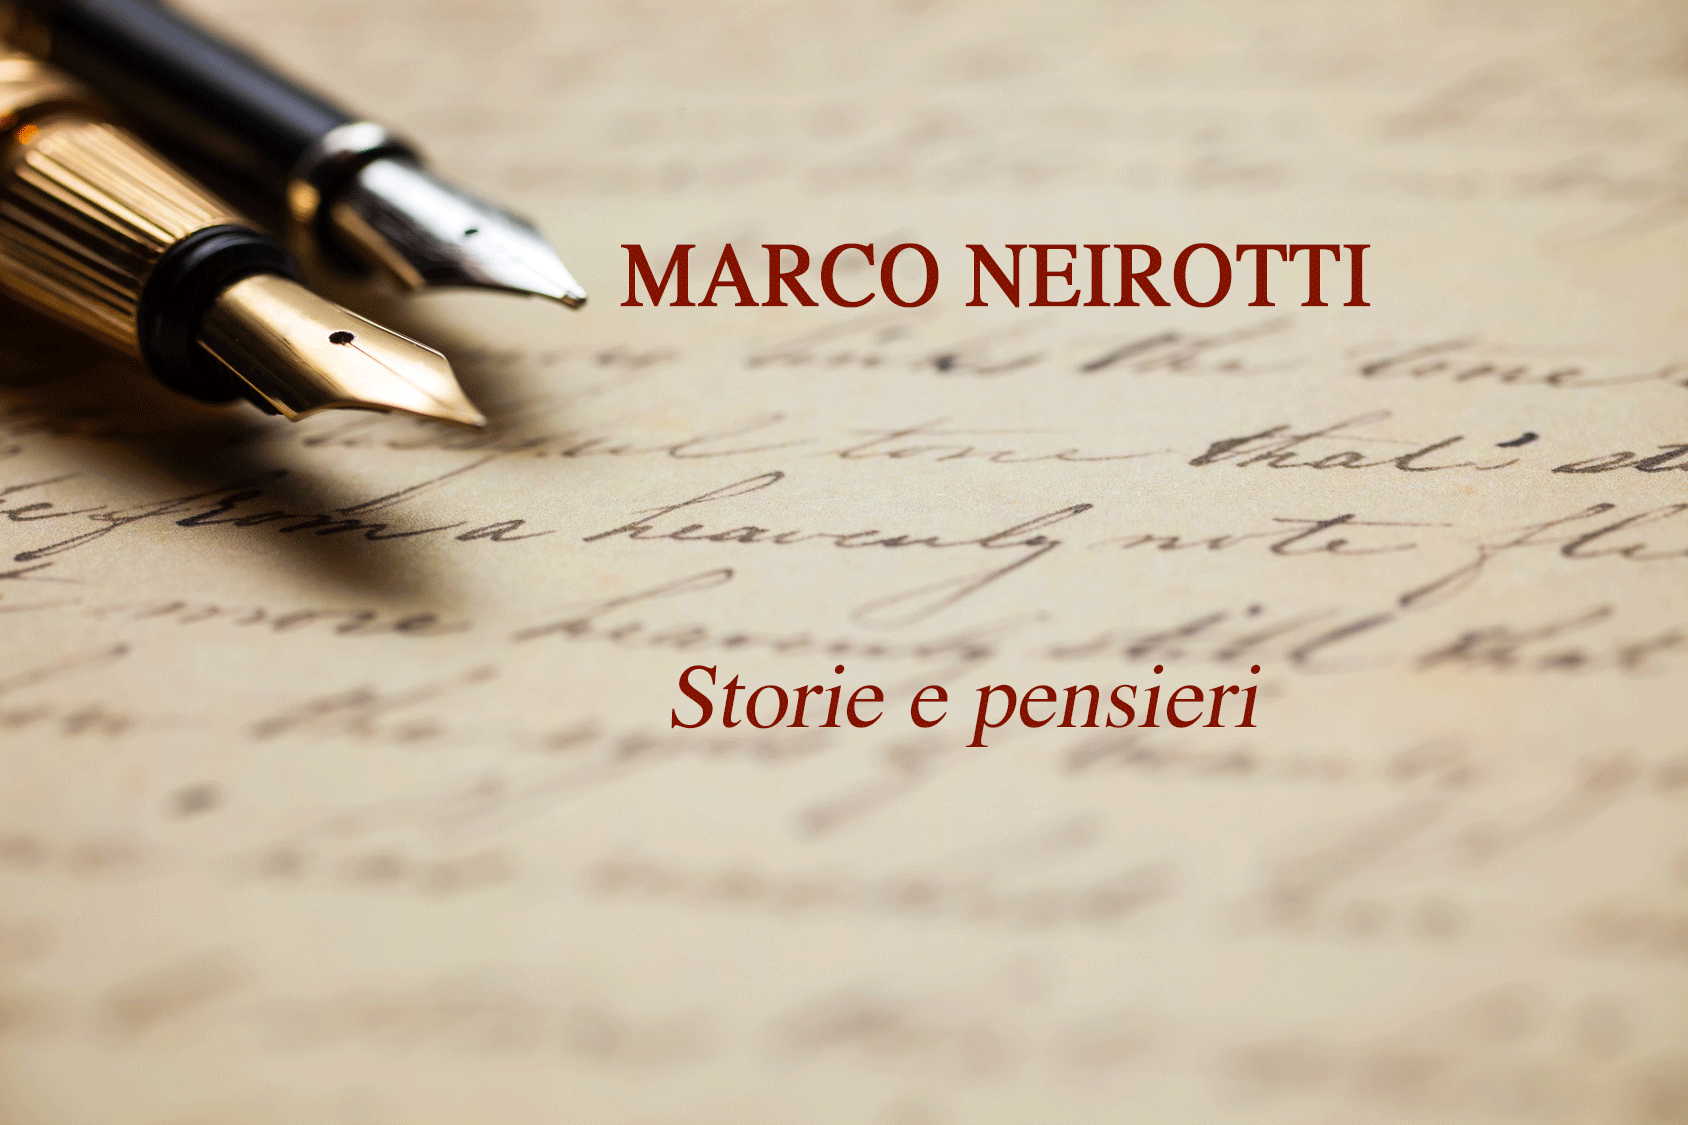 Marco Neirotti - Storie e pensieri